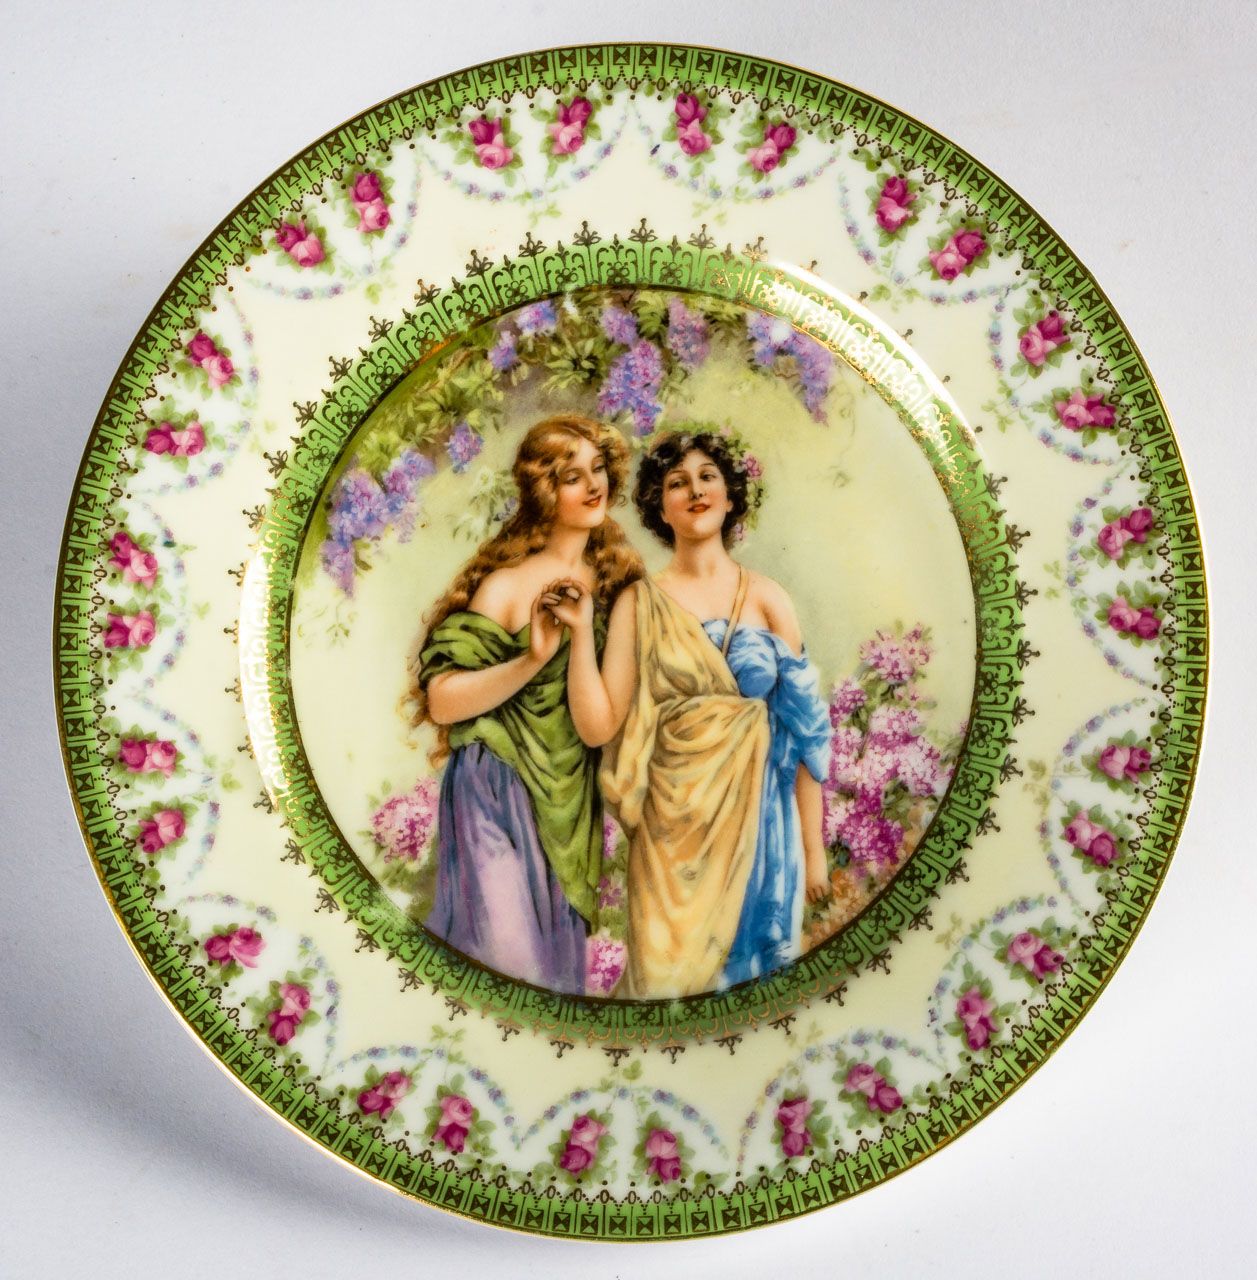 PORZELLAN-TELLER MIT ROMANTISCHER SZENE Fábrica de porcelana vienesa y Comte Har&hellip;